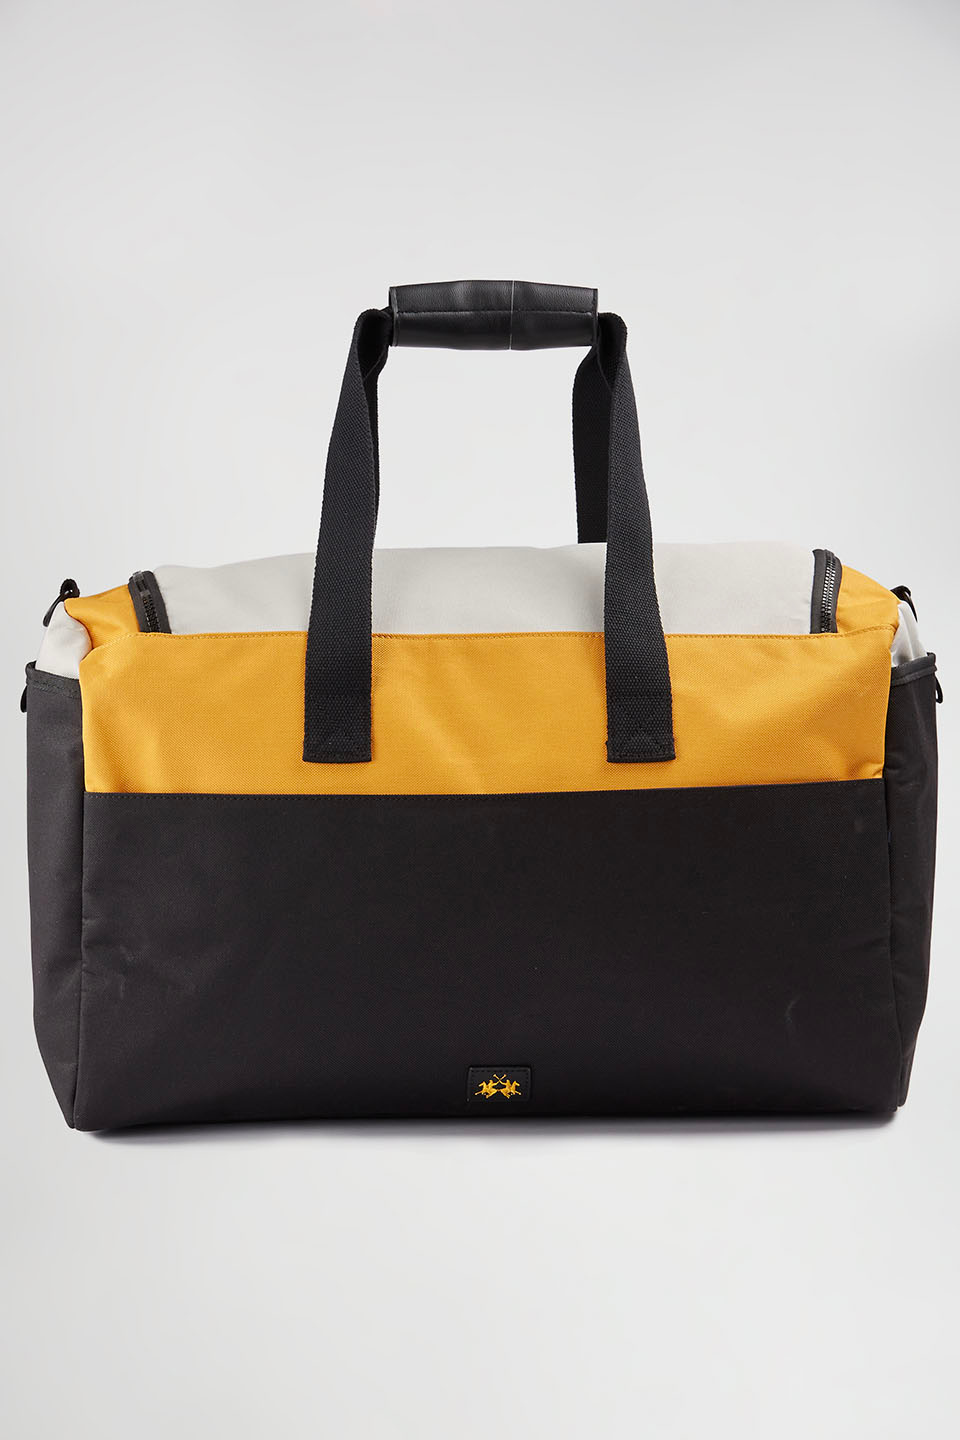 Grand sac en polyester - La Martina - Official Online Shop